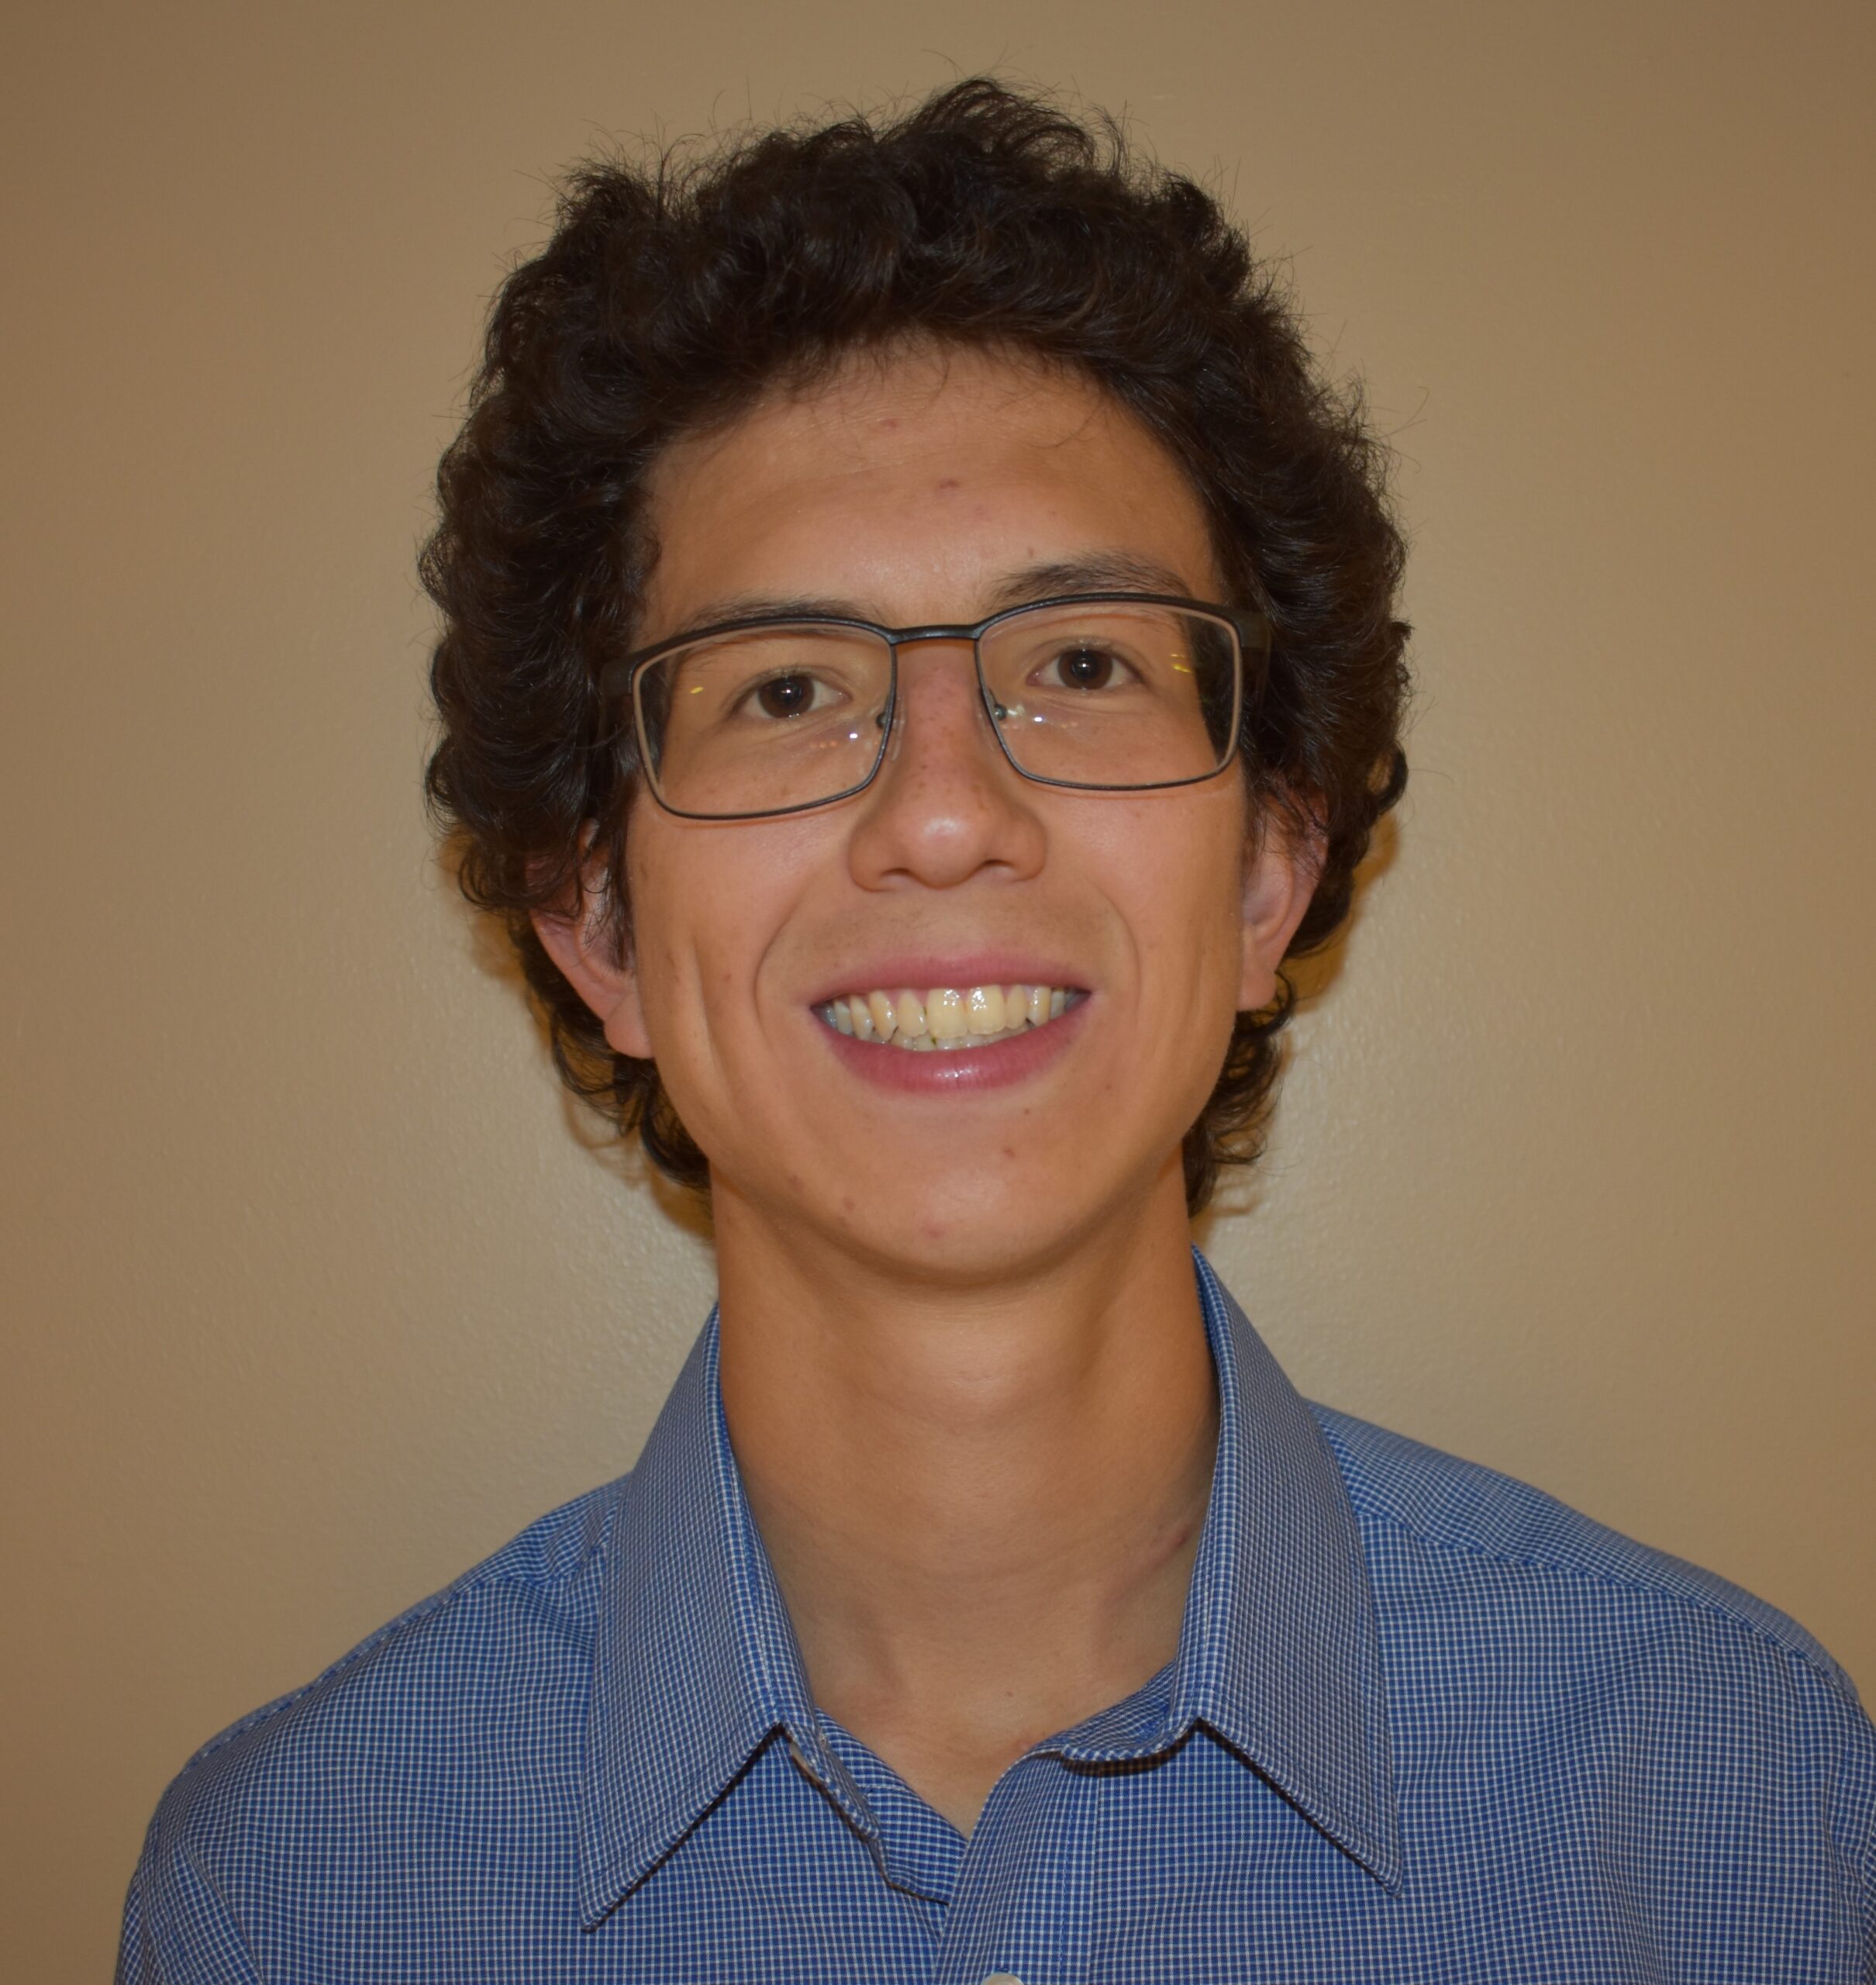 LSI welcomes graduate student Aaron Silva Trenkle